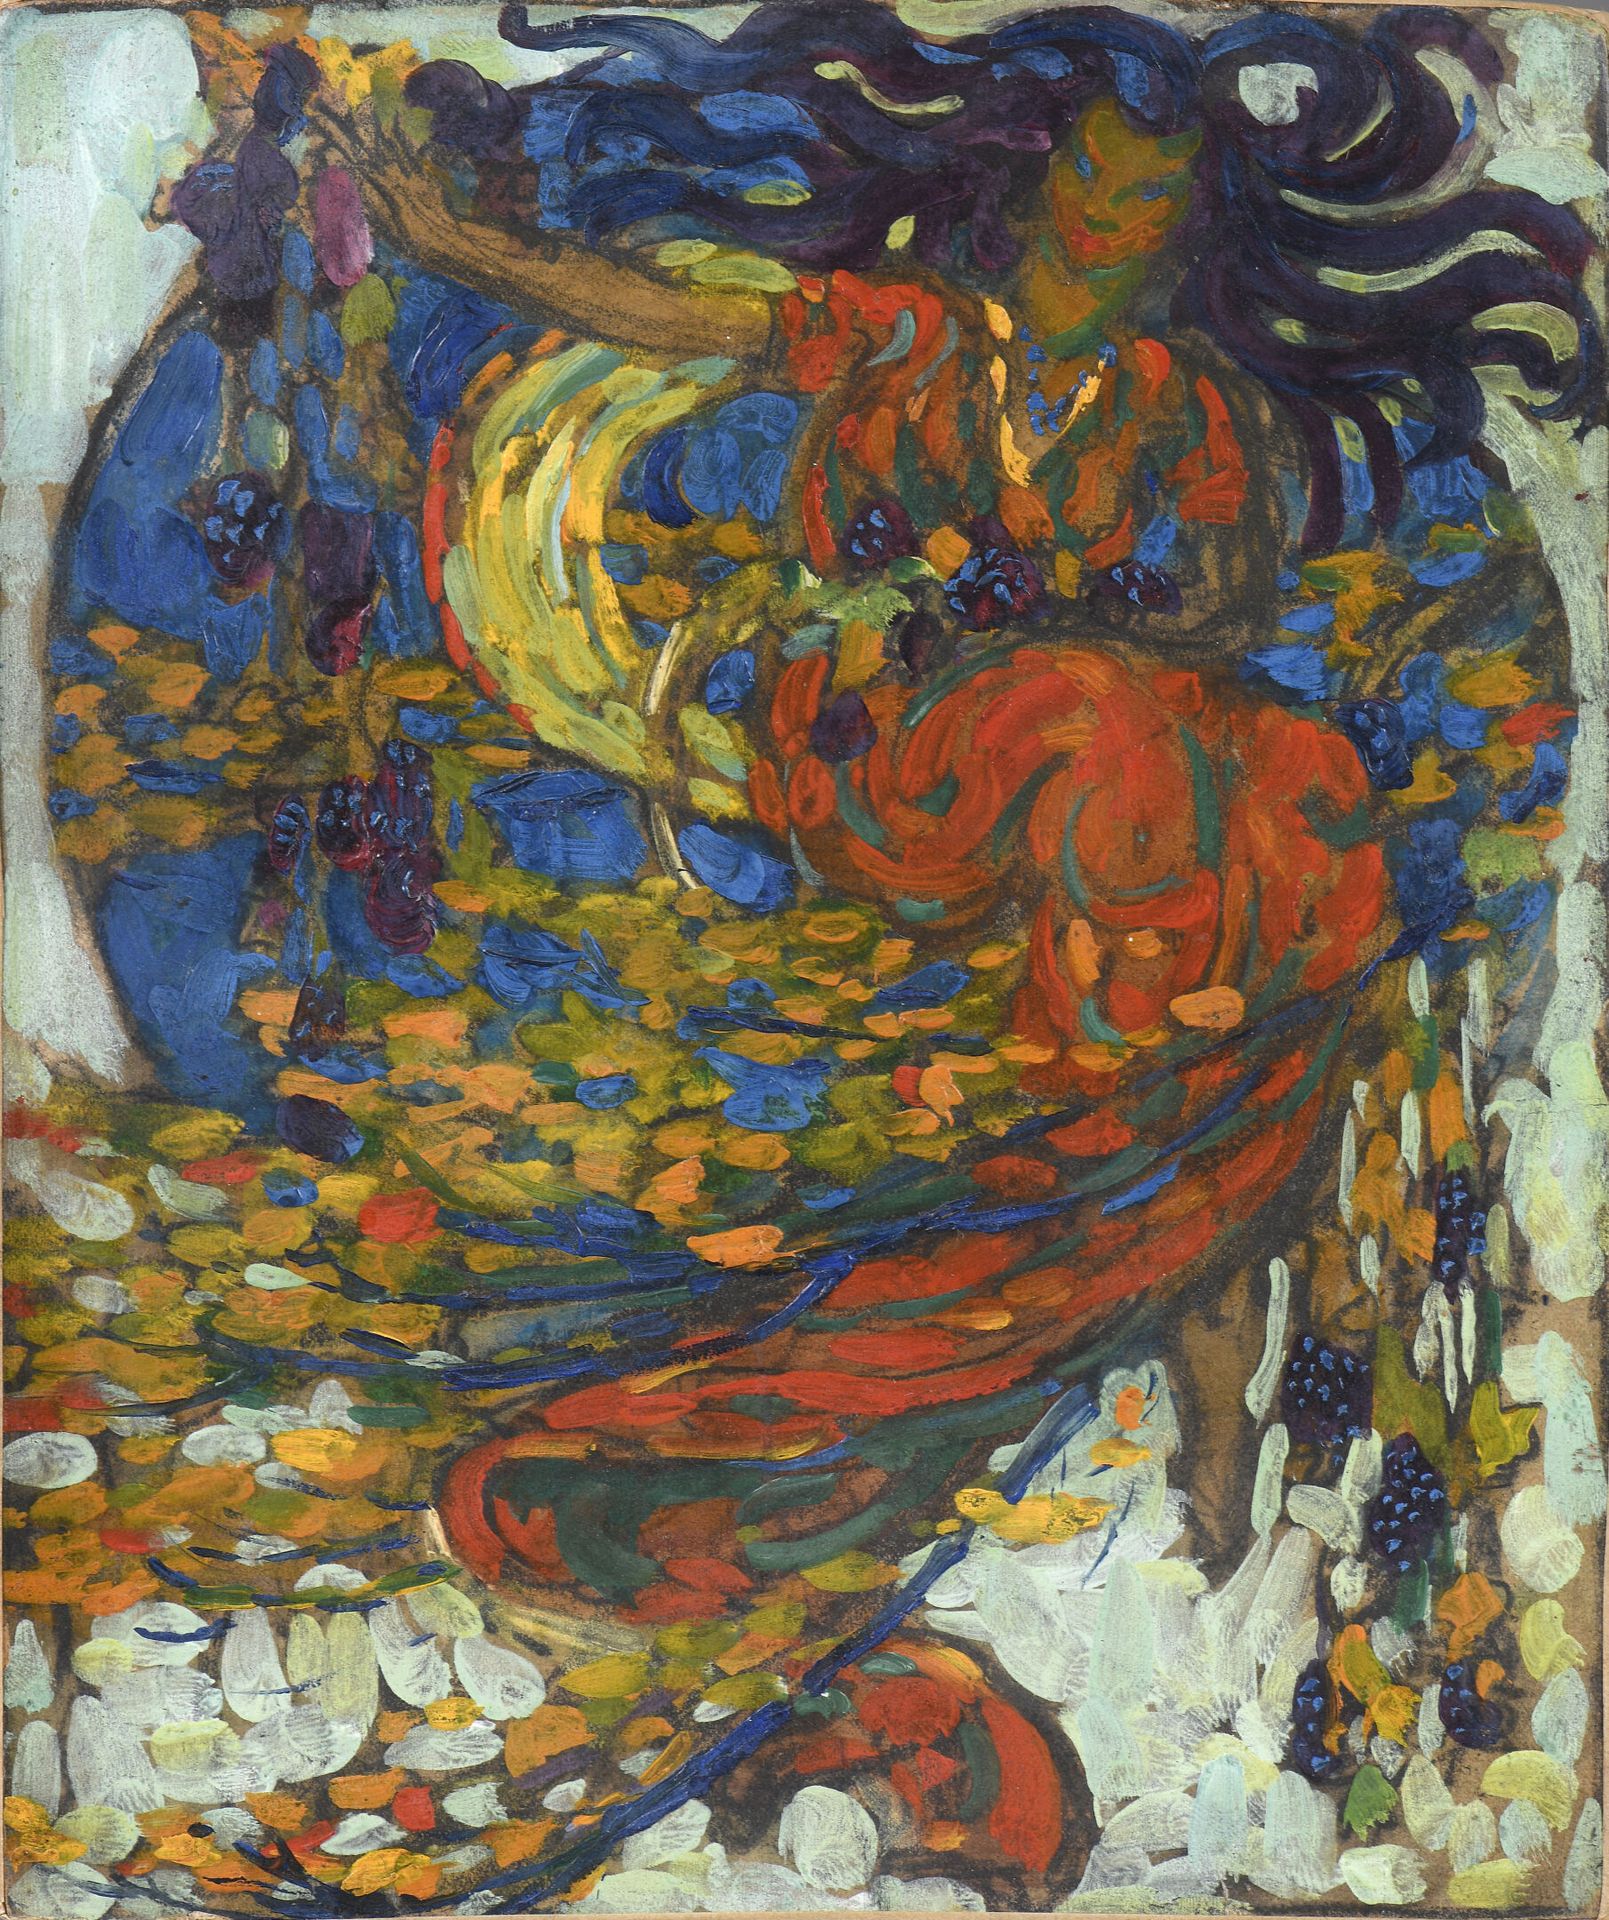 Null 弗朗季谢克-库普卡（1871-1957）
秋天的寓言 
纸板油画，裱在画布上
H.26 厘米 - 22 厘米 HVS
 
出处： 
纽约苏富比拍卖行，&hellip;